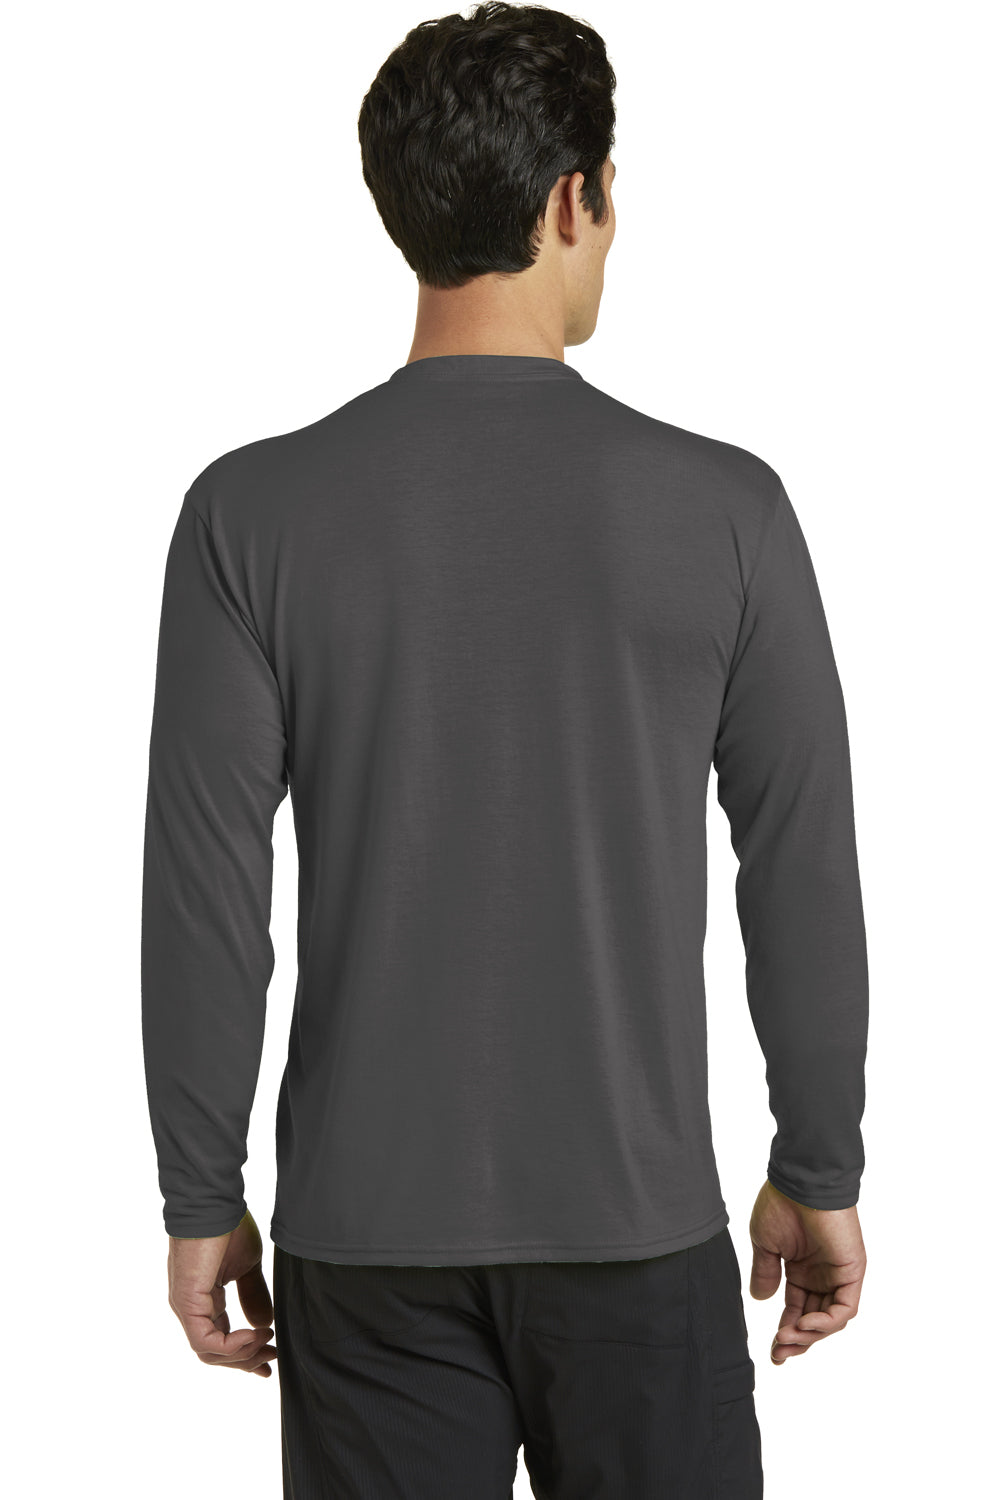 Port & Company PC381LS Mens Dry Zone Performance Moisture Wicking Long Sleeve Crewneck T-Shirt Charcoal Grey Back